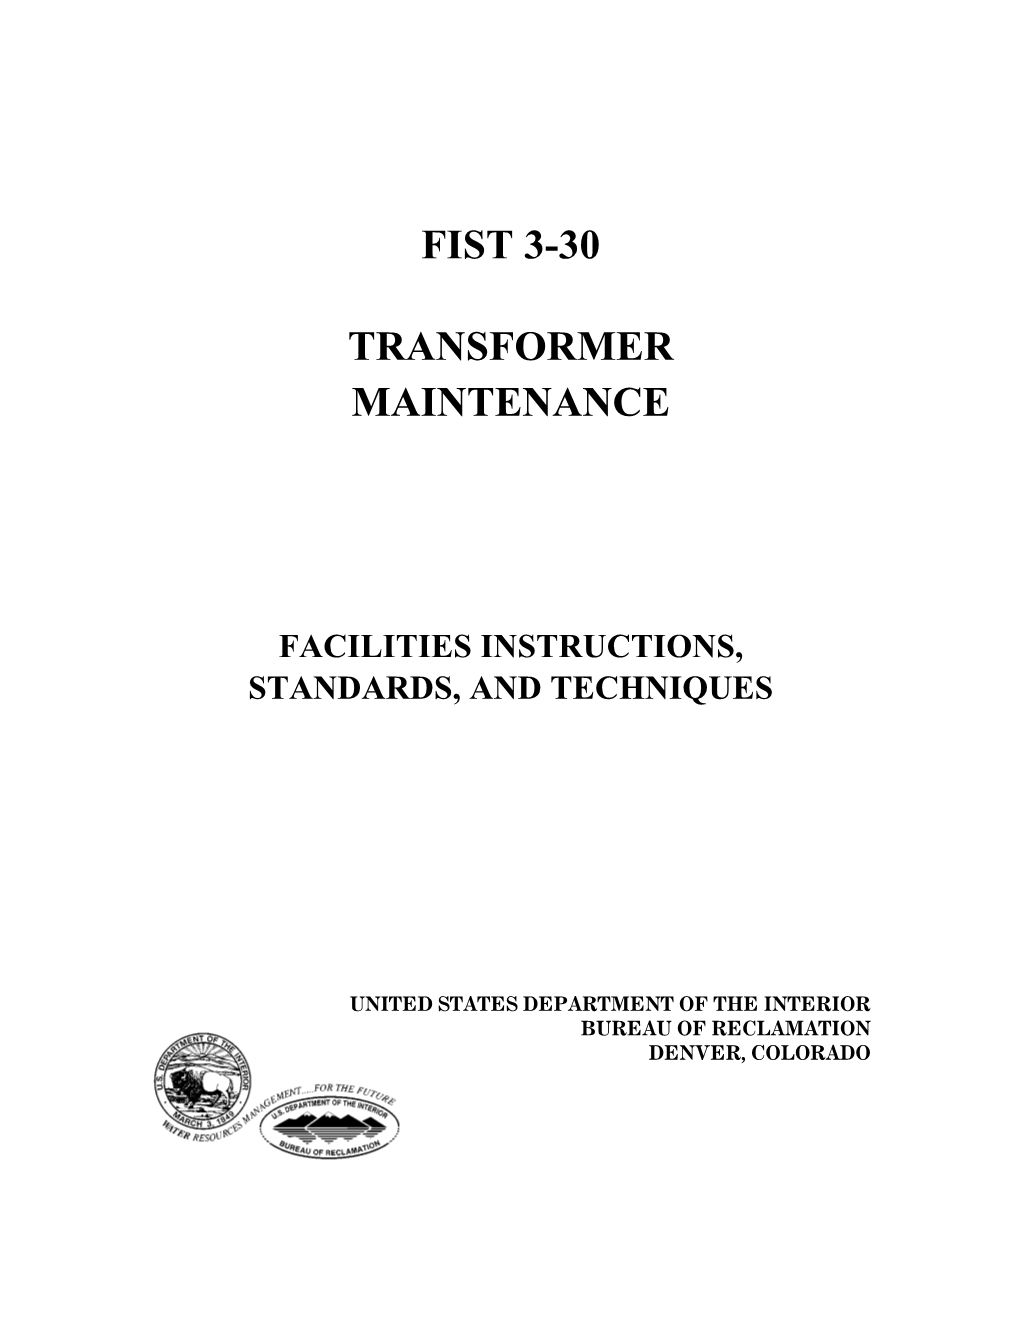 Fist 3-30 Transformer Maintenance